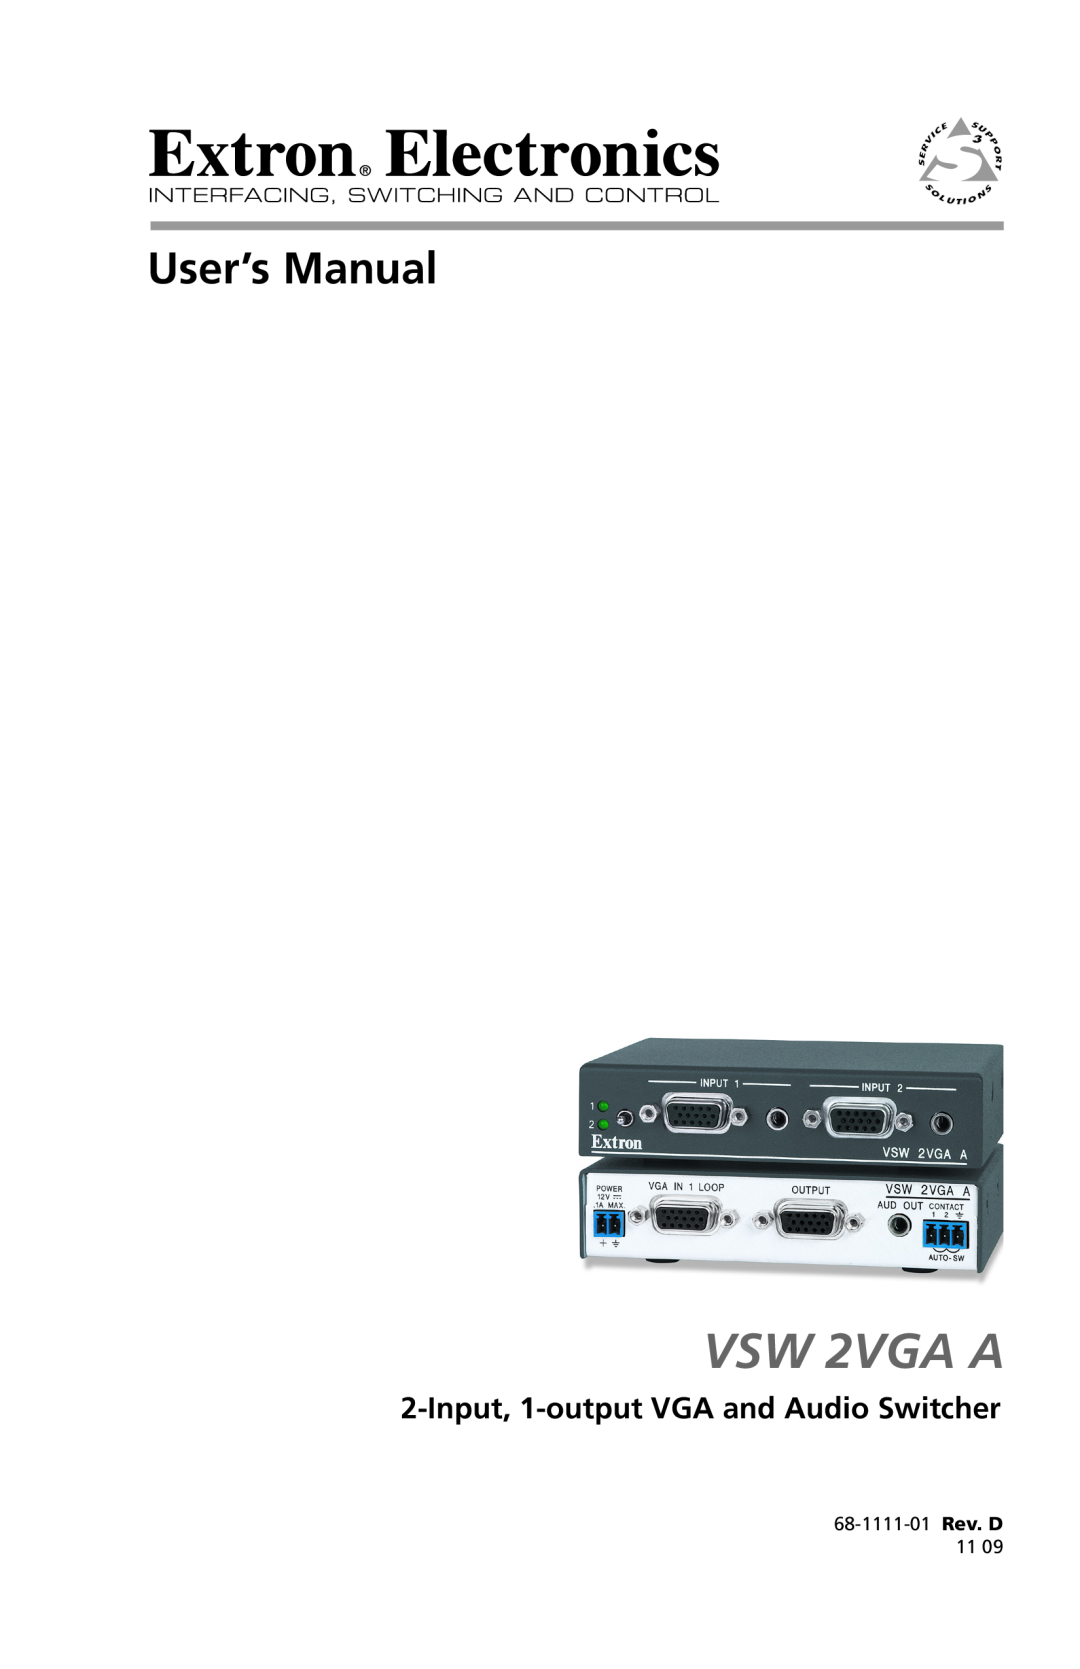 Extron electronic VSW 2VGA A user manual Input, 1-output VGA and Audio Switcher, User’s Manual, 68-1111-01 Rev. D 